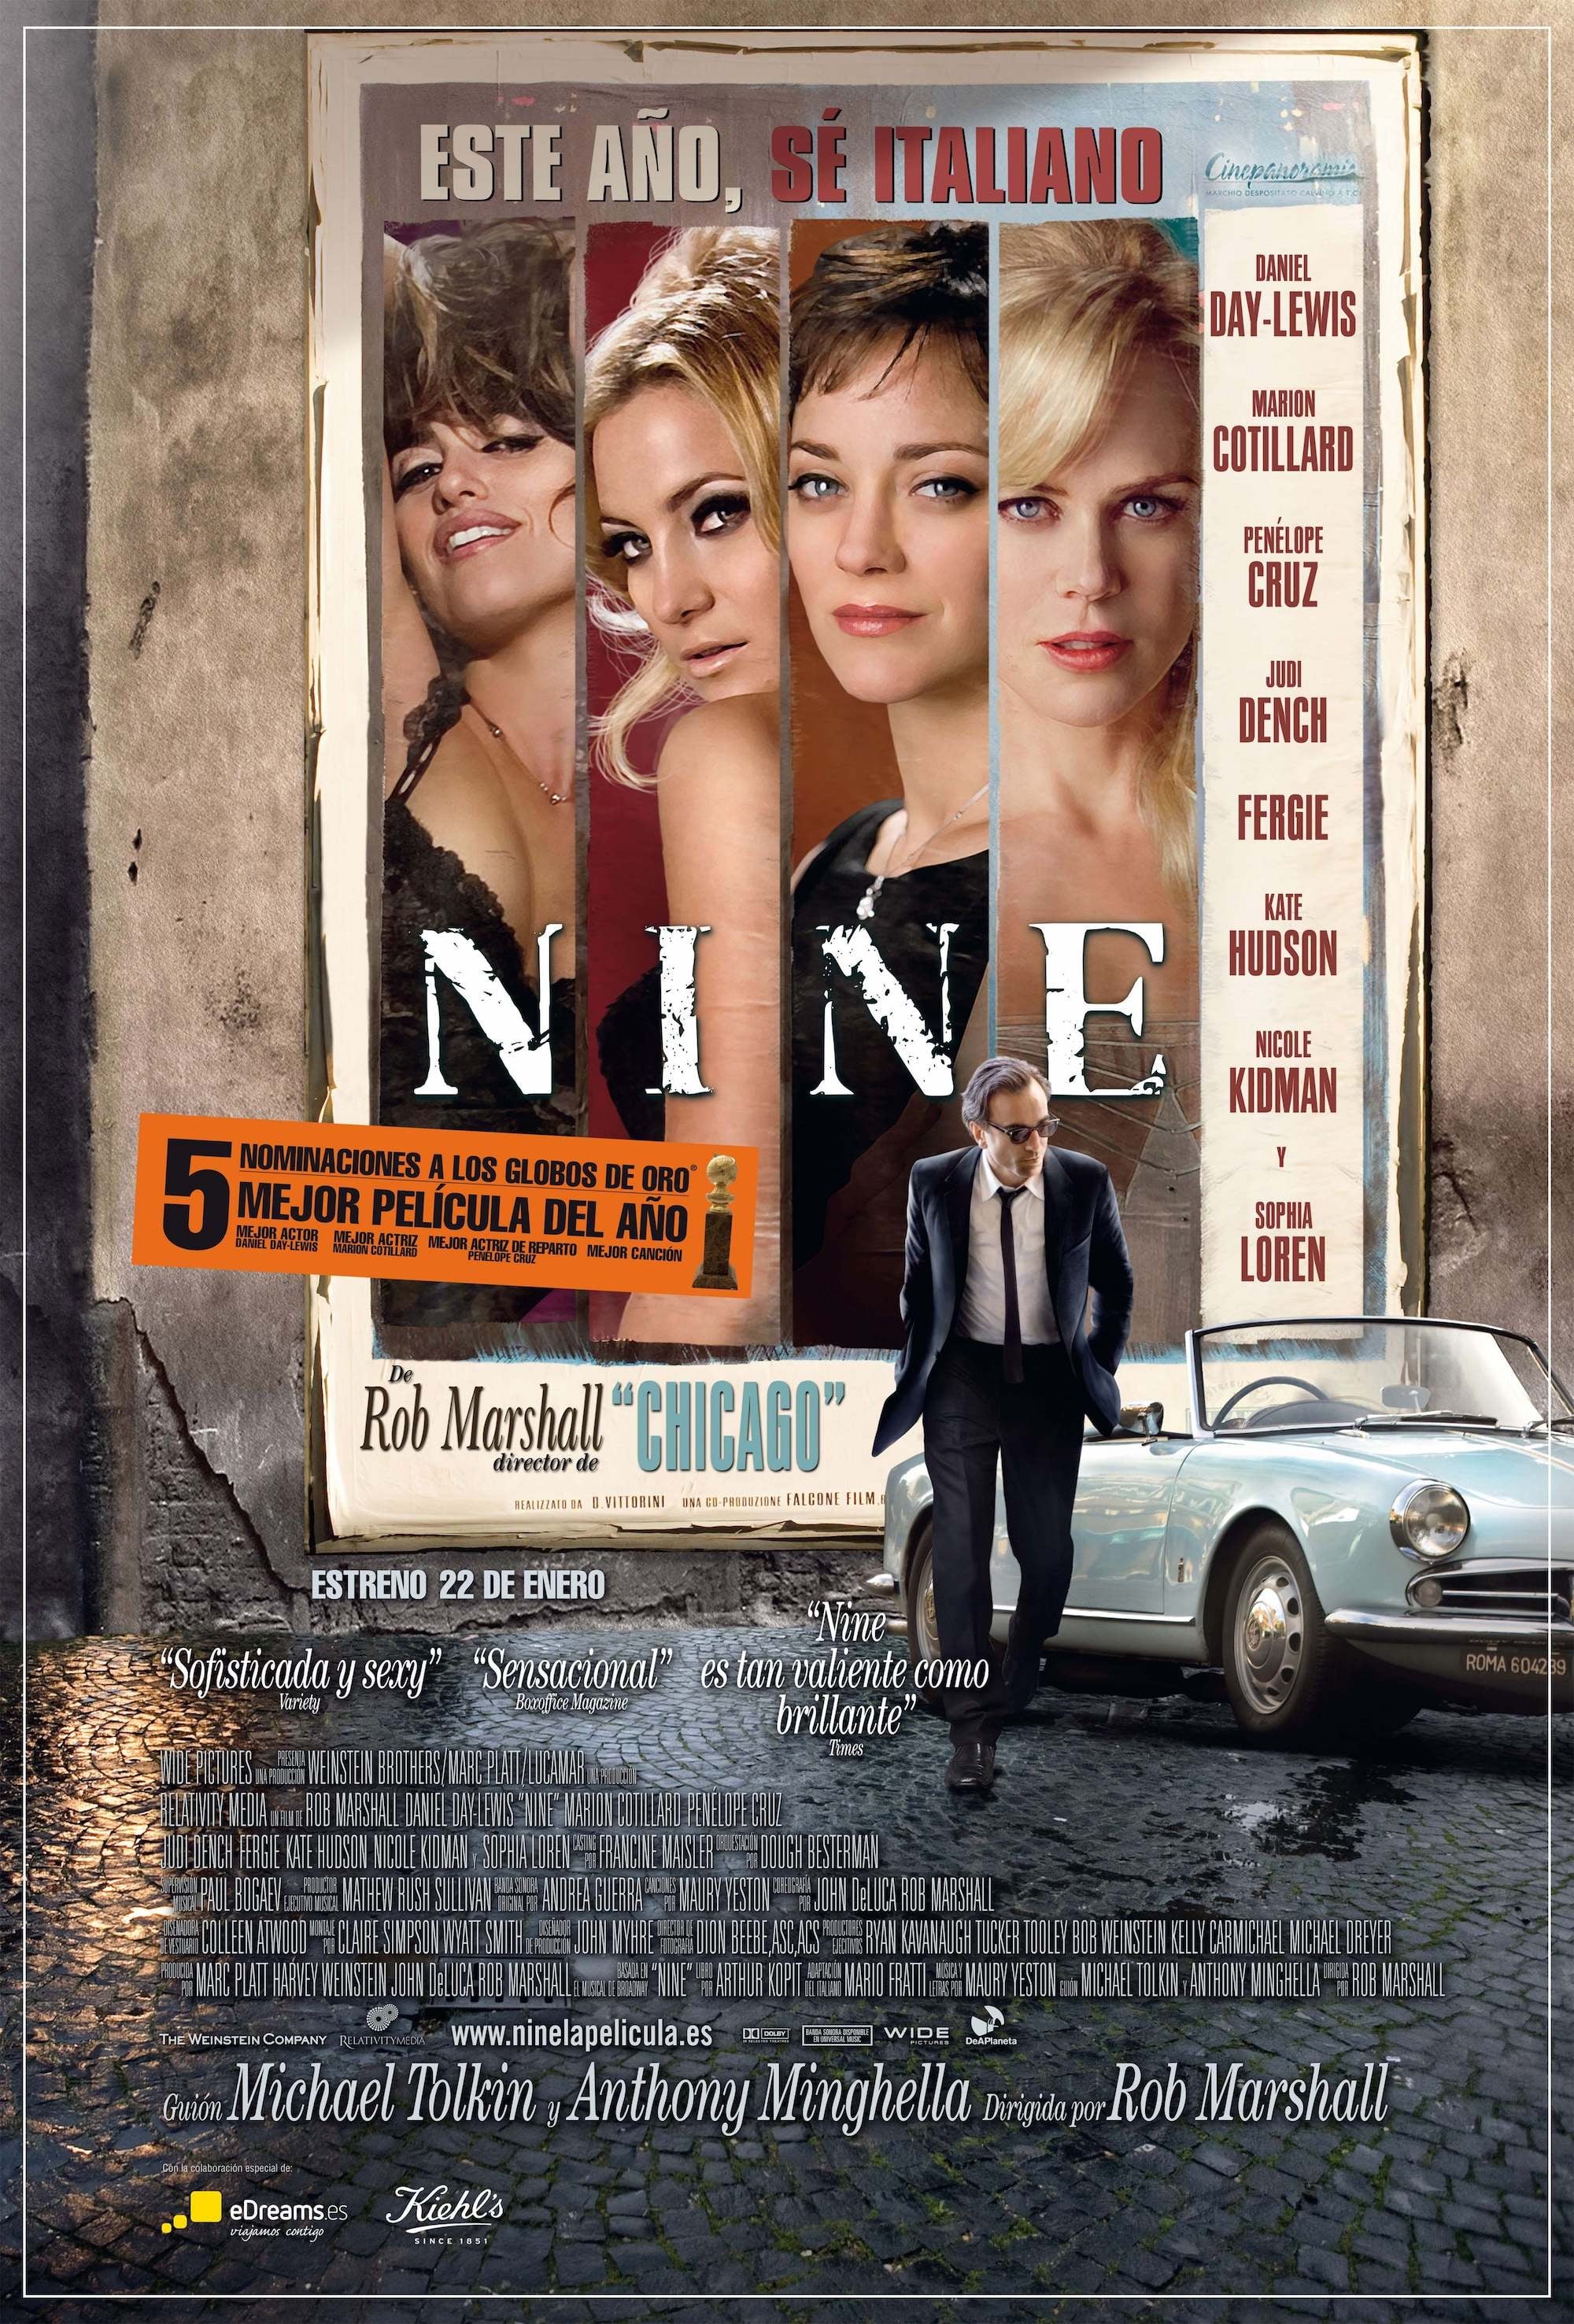 Nine poster